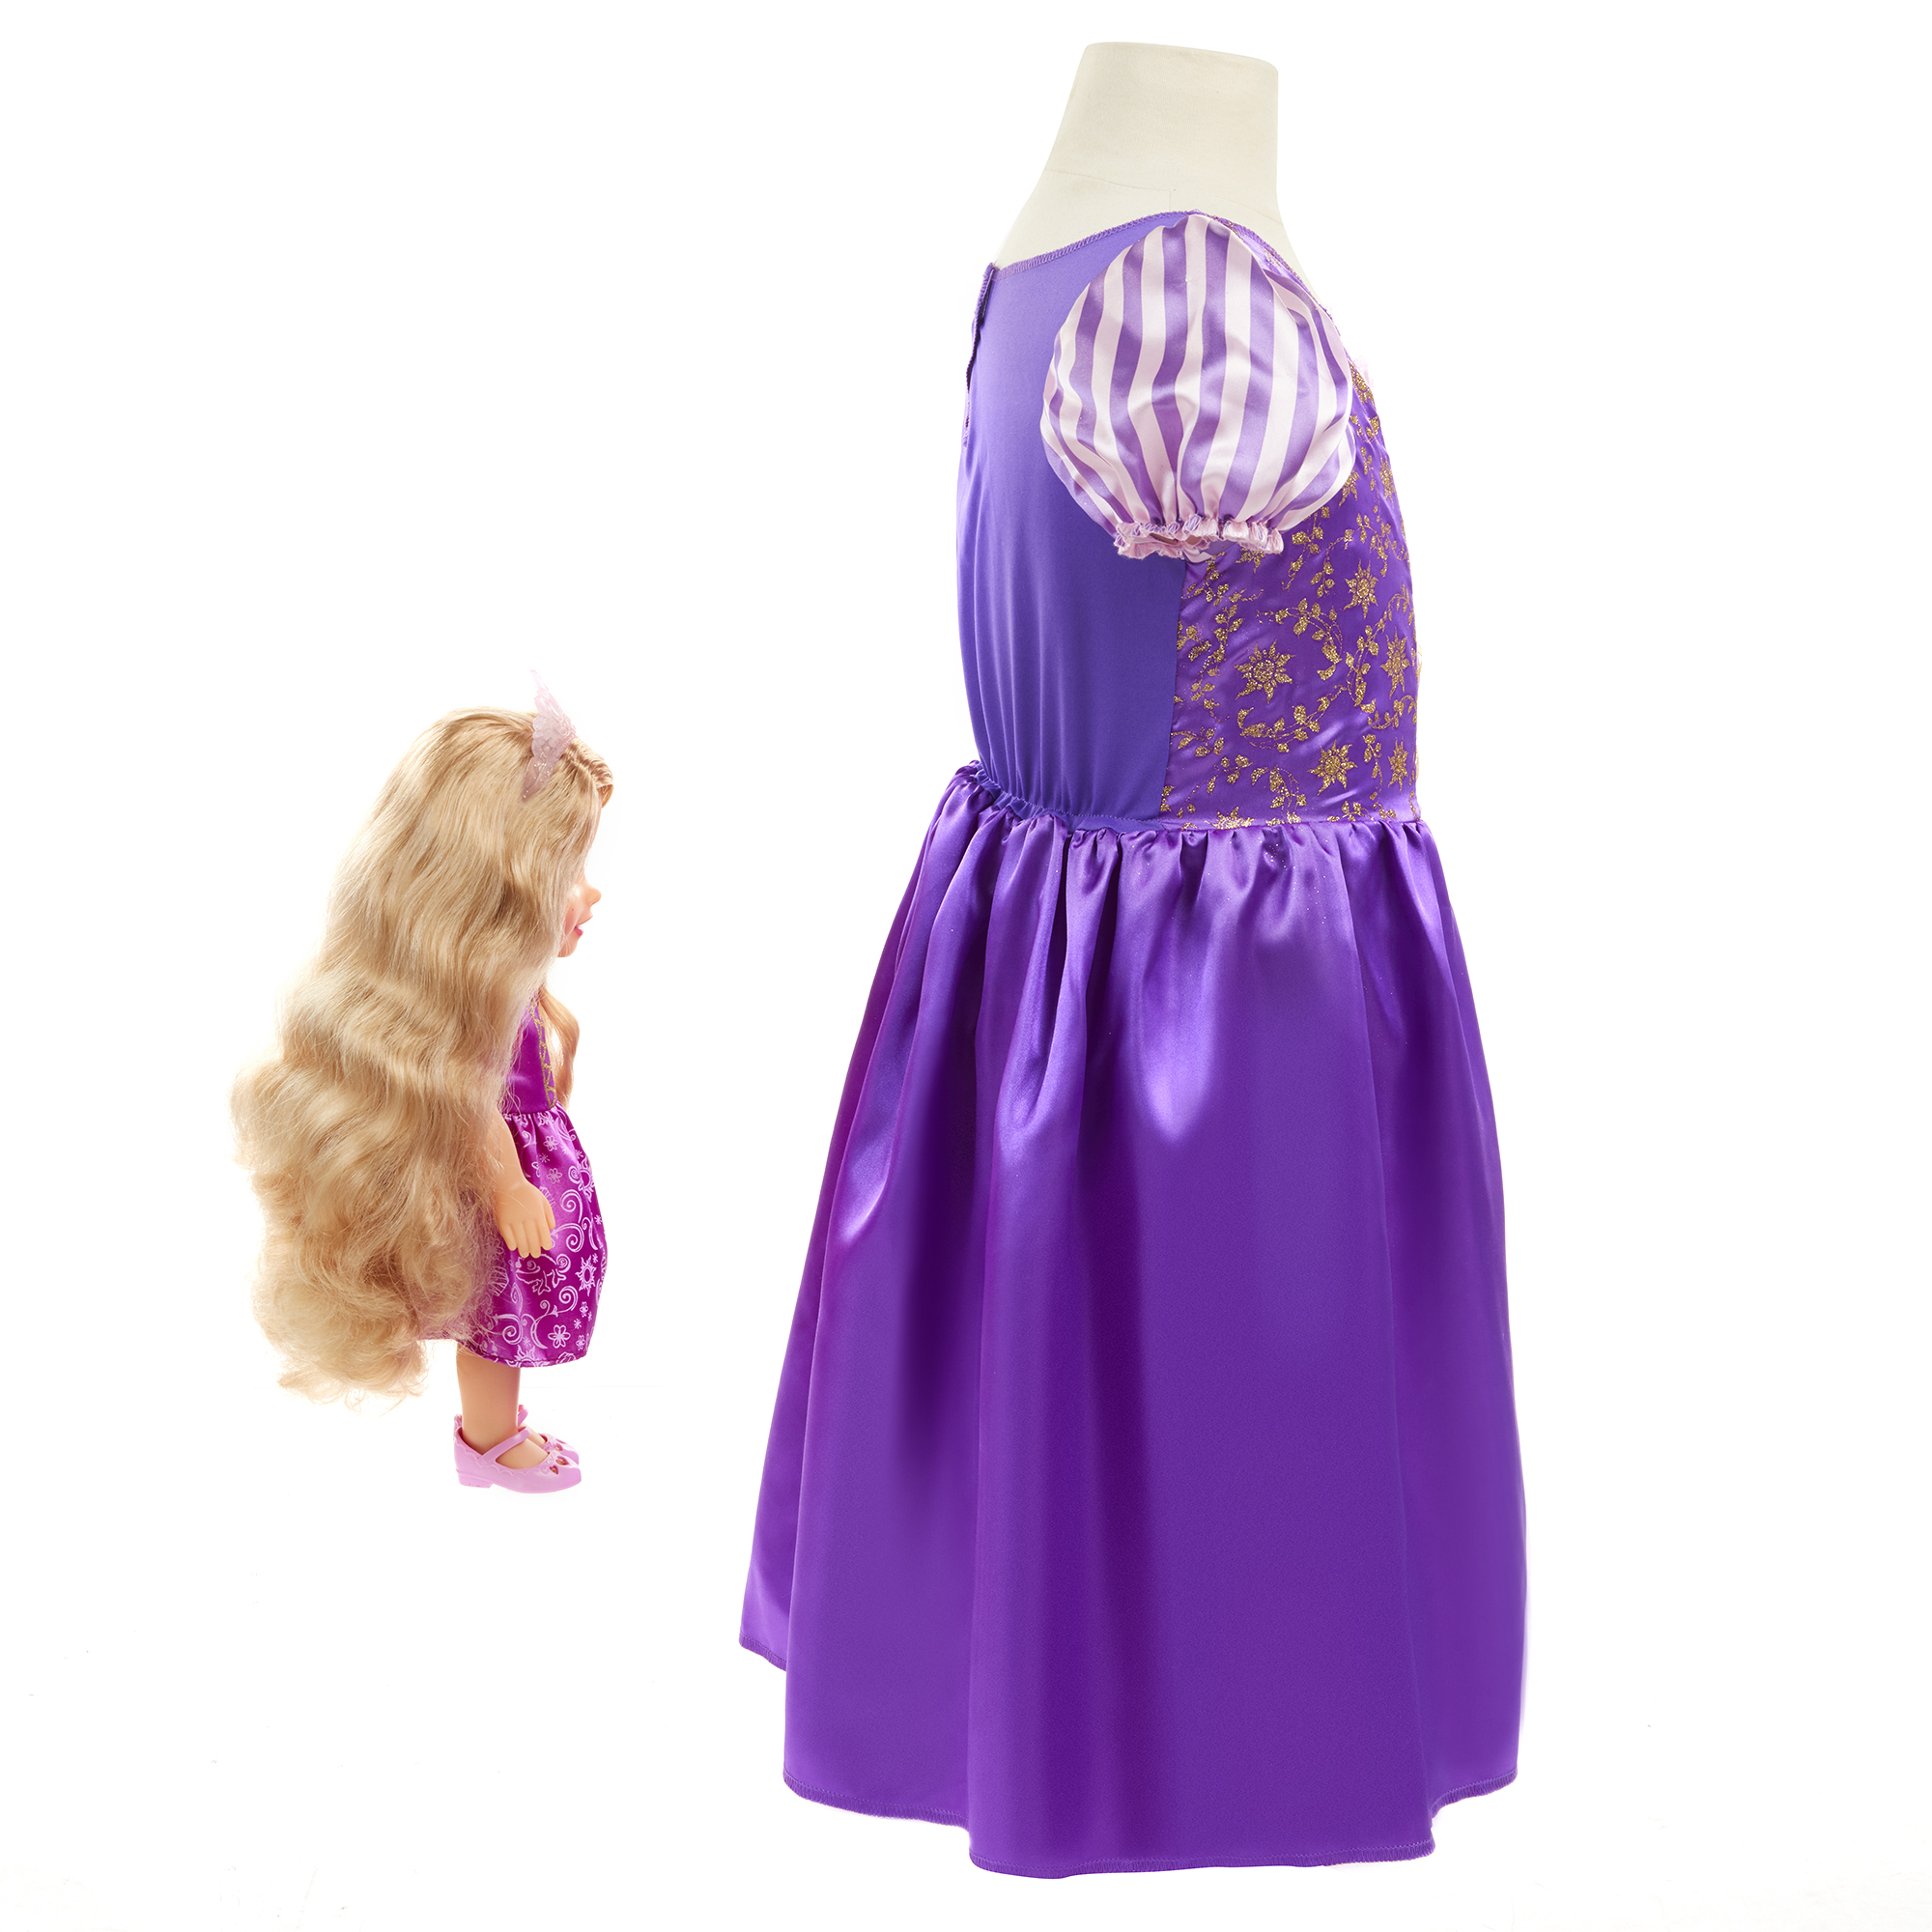 Disney Princess Rapunzel Toddler Doll and Dress - image 4 of 8